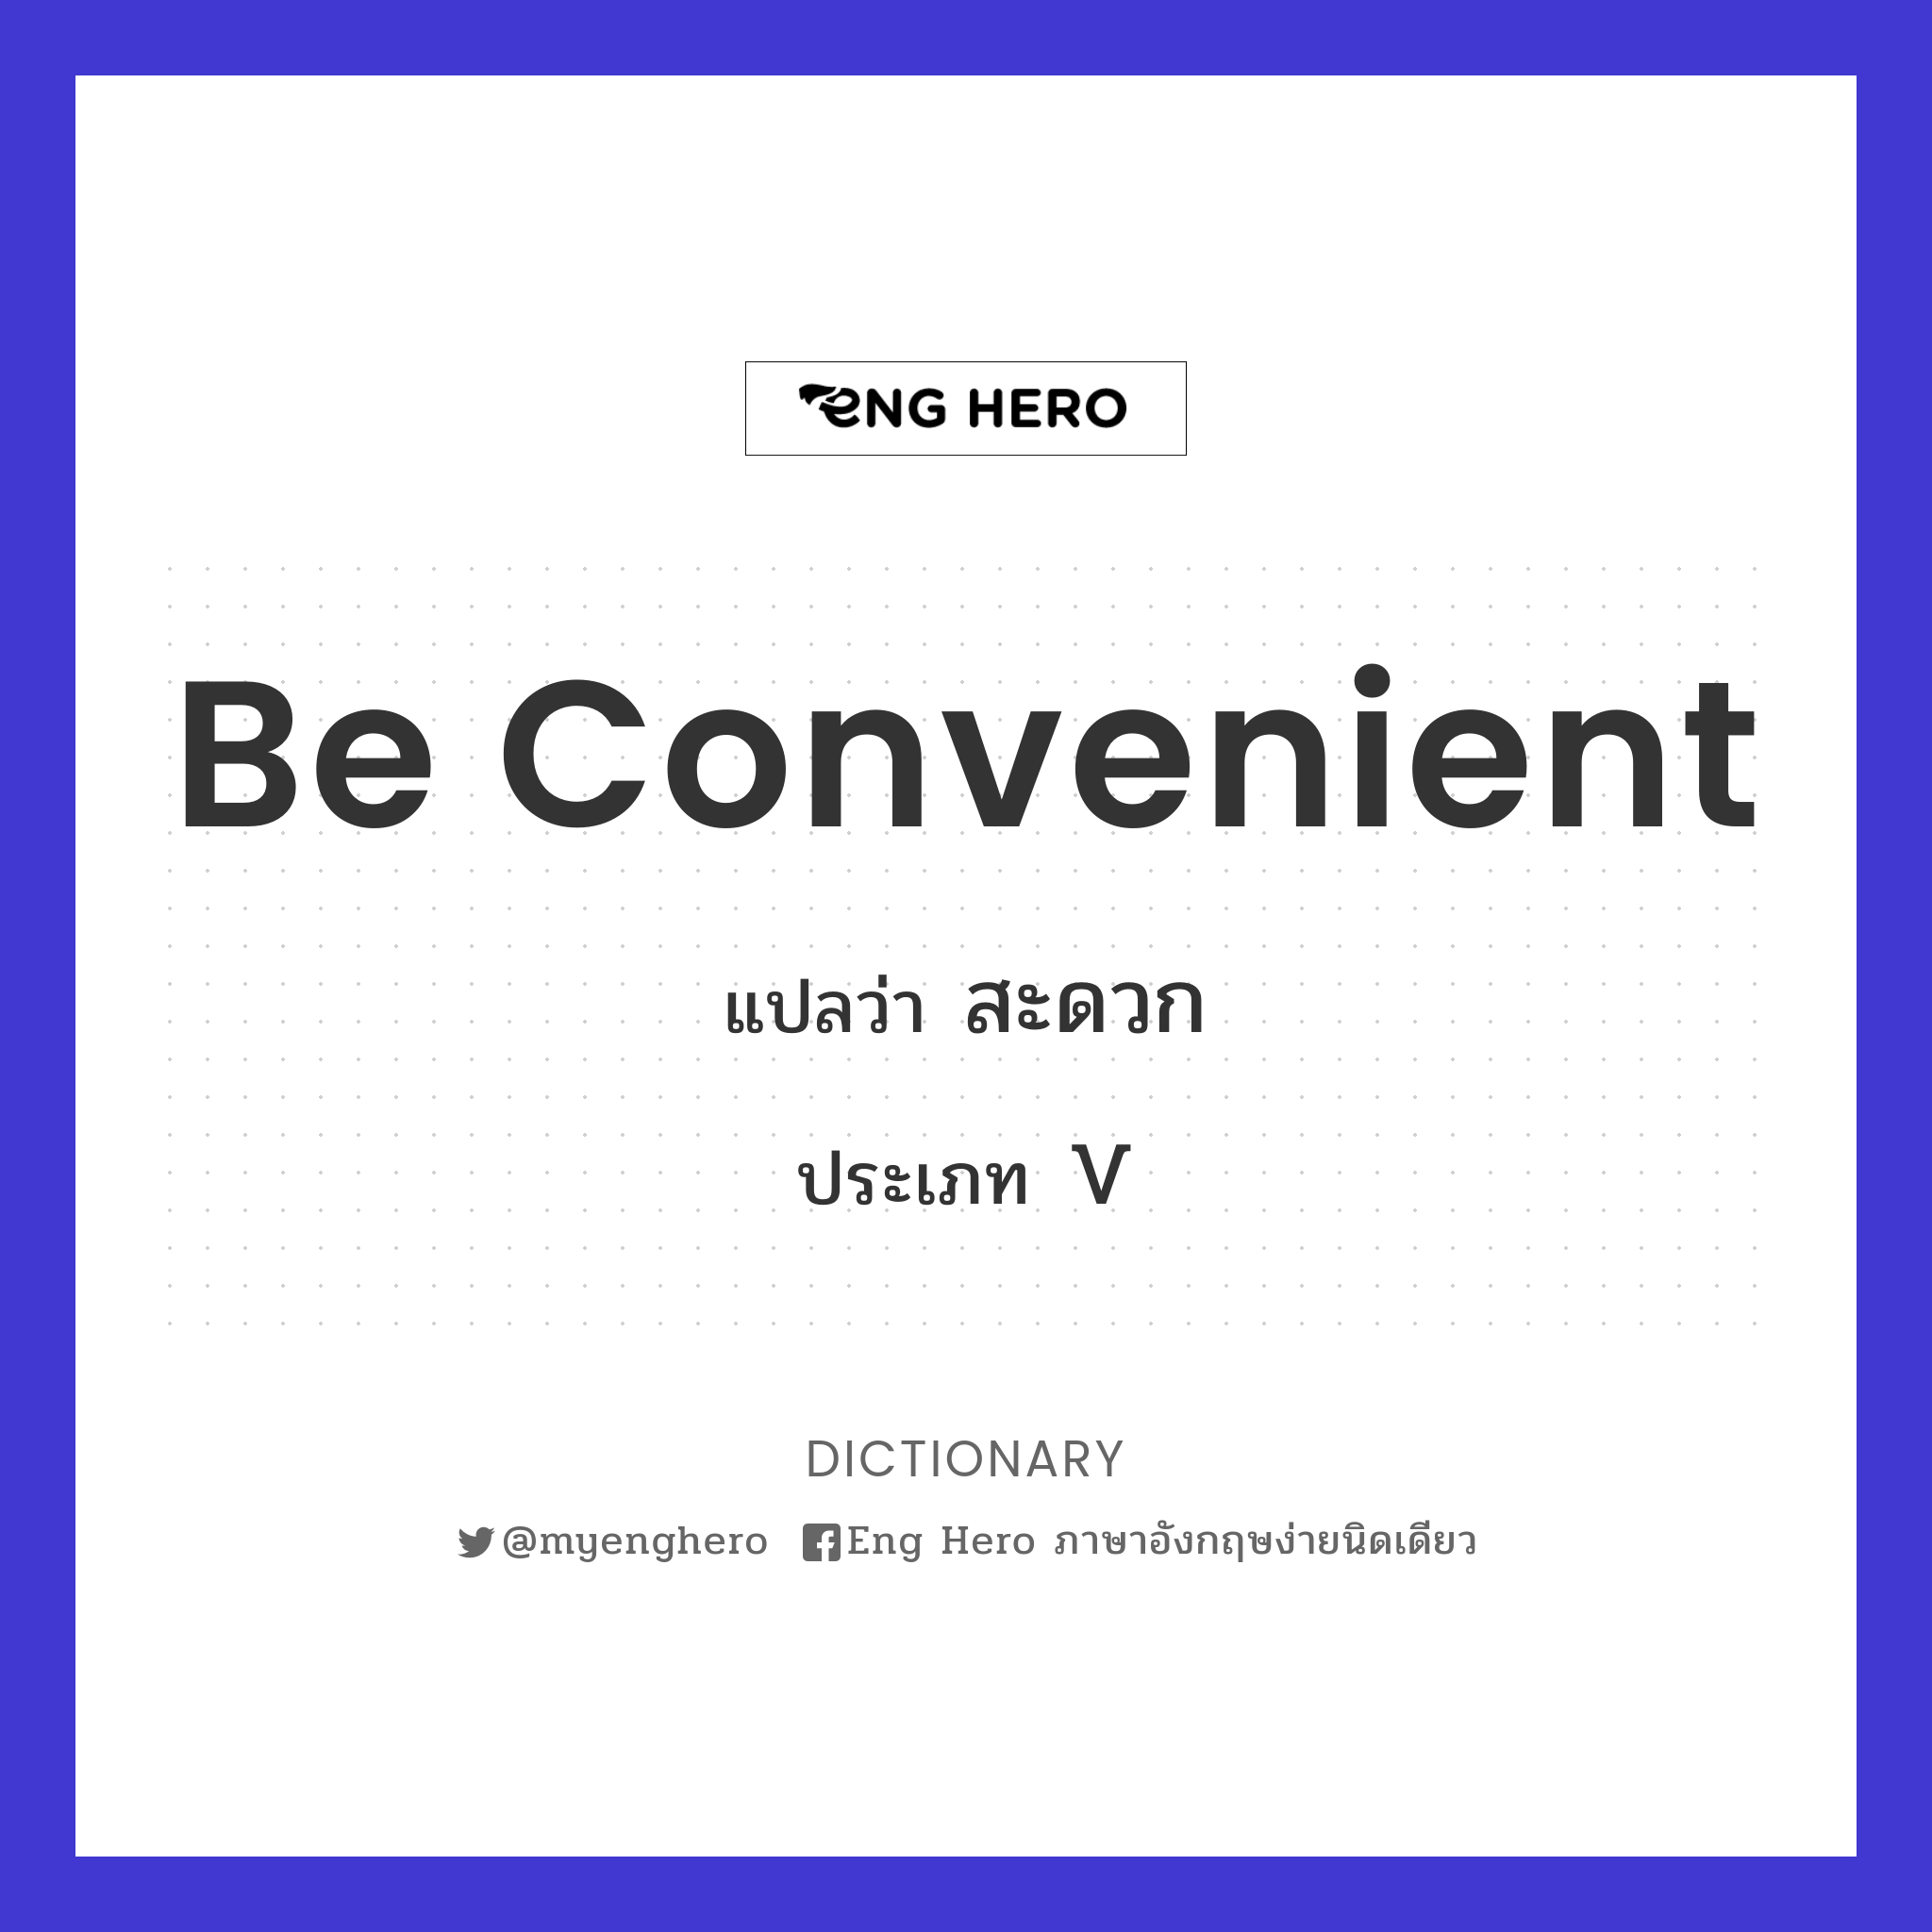 be convenient